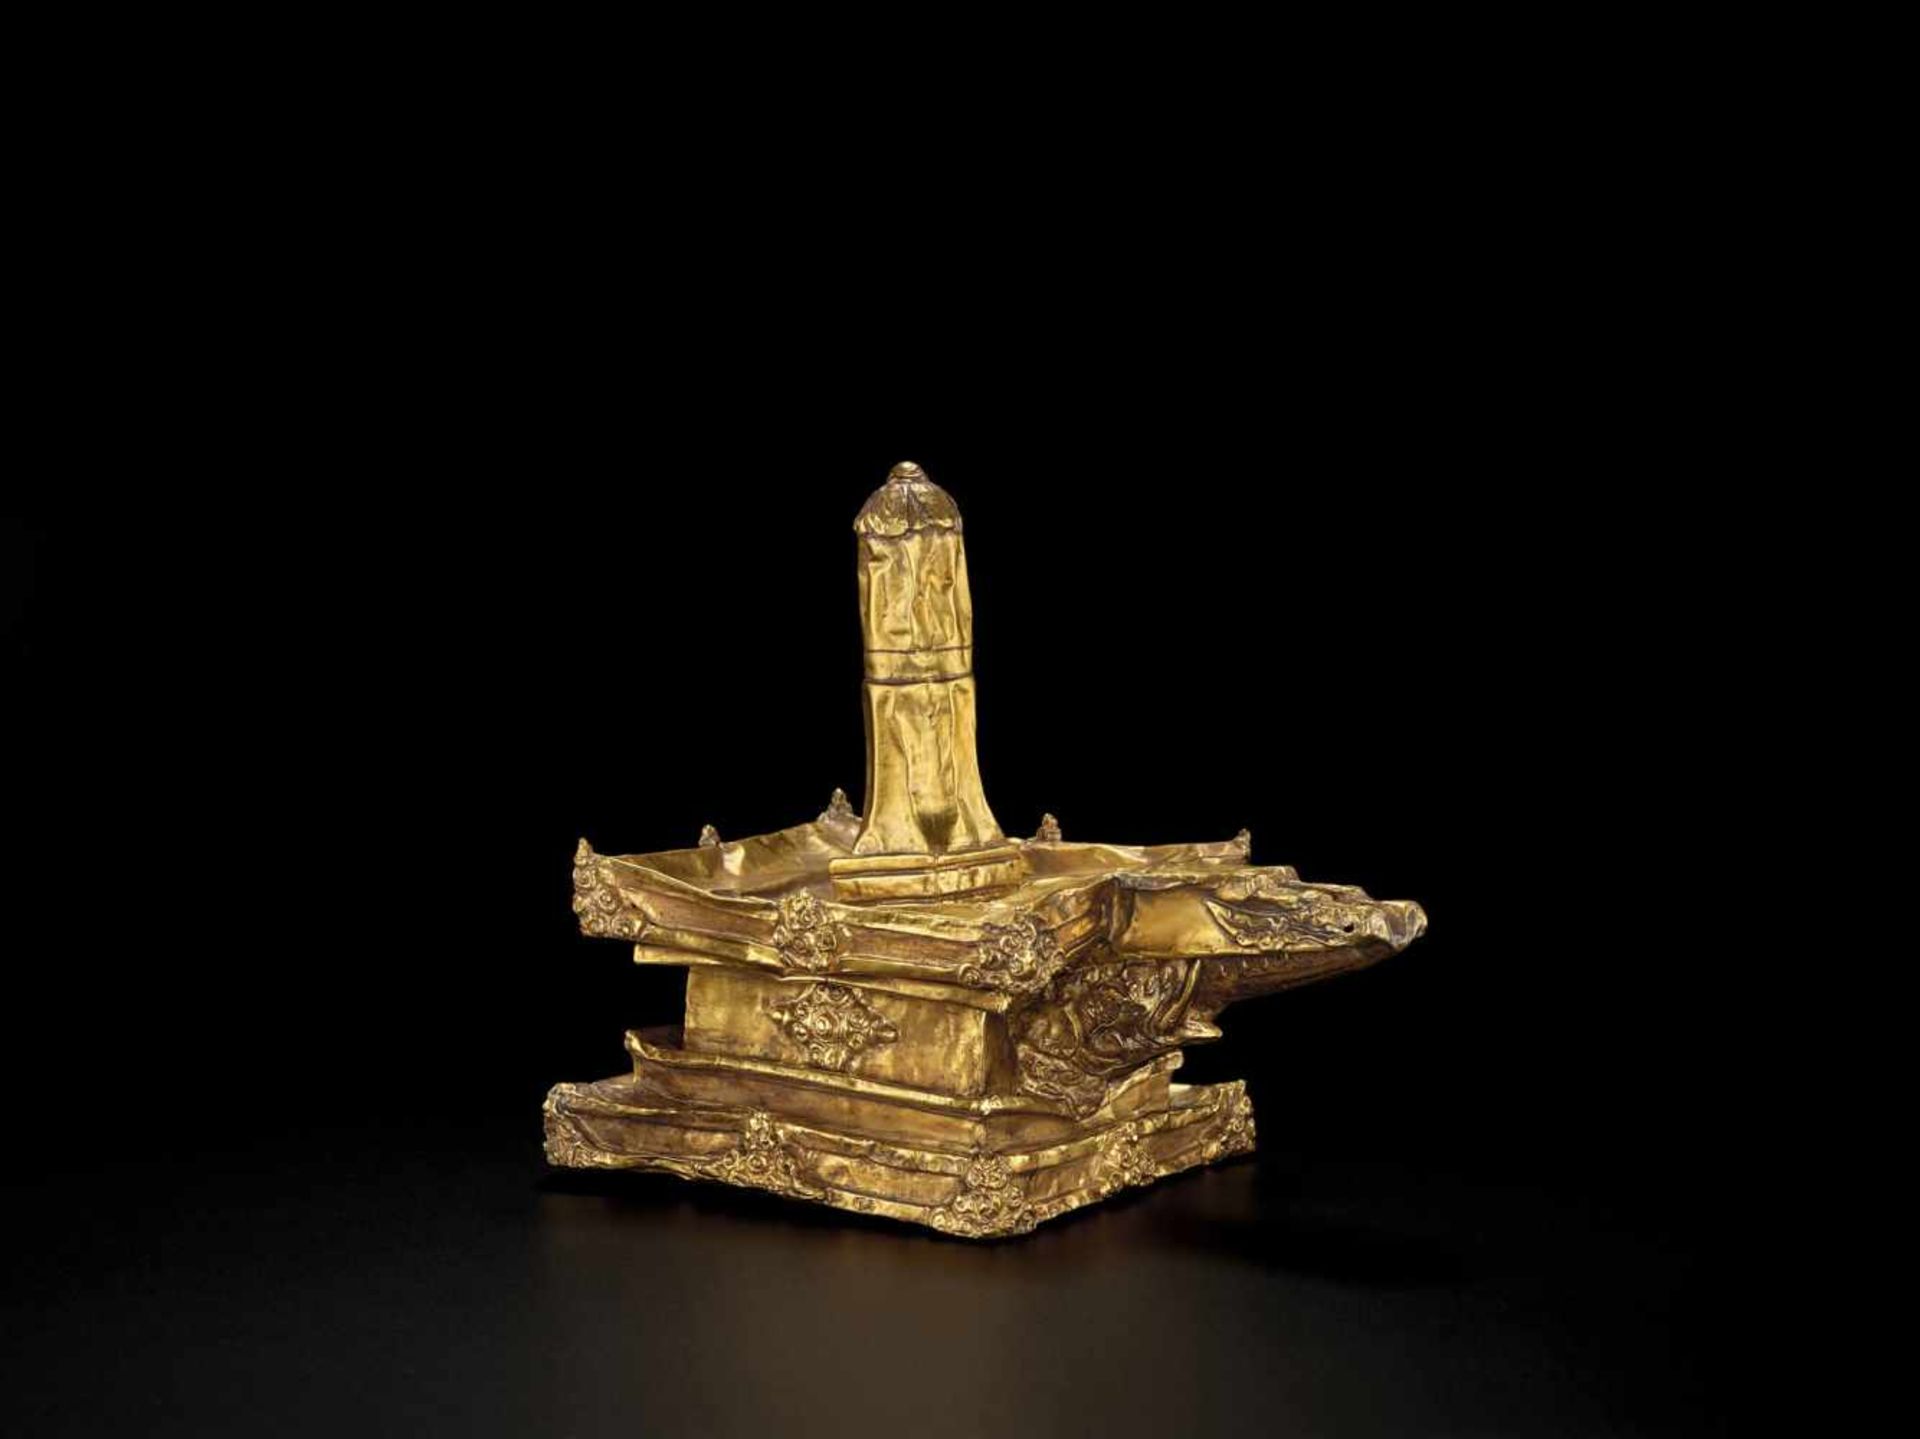 AN UNUSUAL CHAM REPOUSSÉ GOLD MINIATURE LINGAM WITH ELEPHANT SPOUT Champa, 10th – 12th century. A